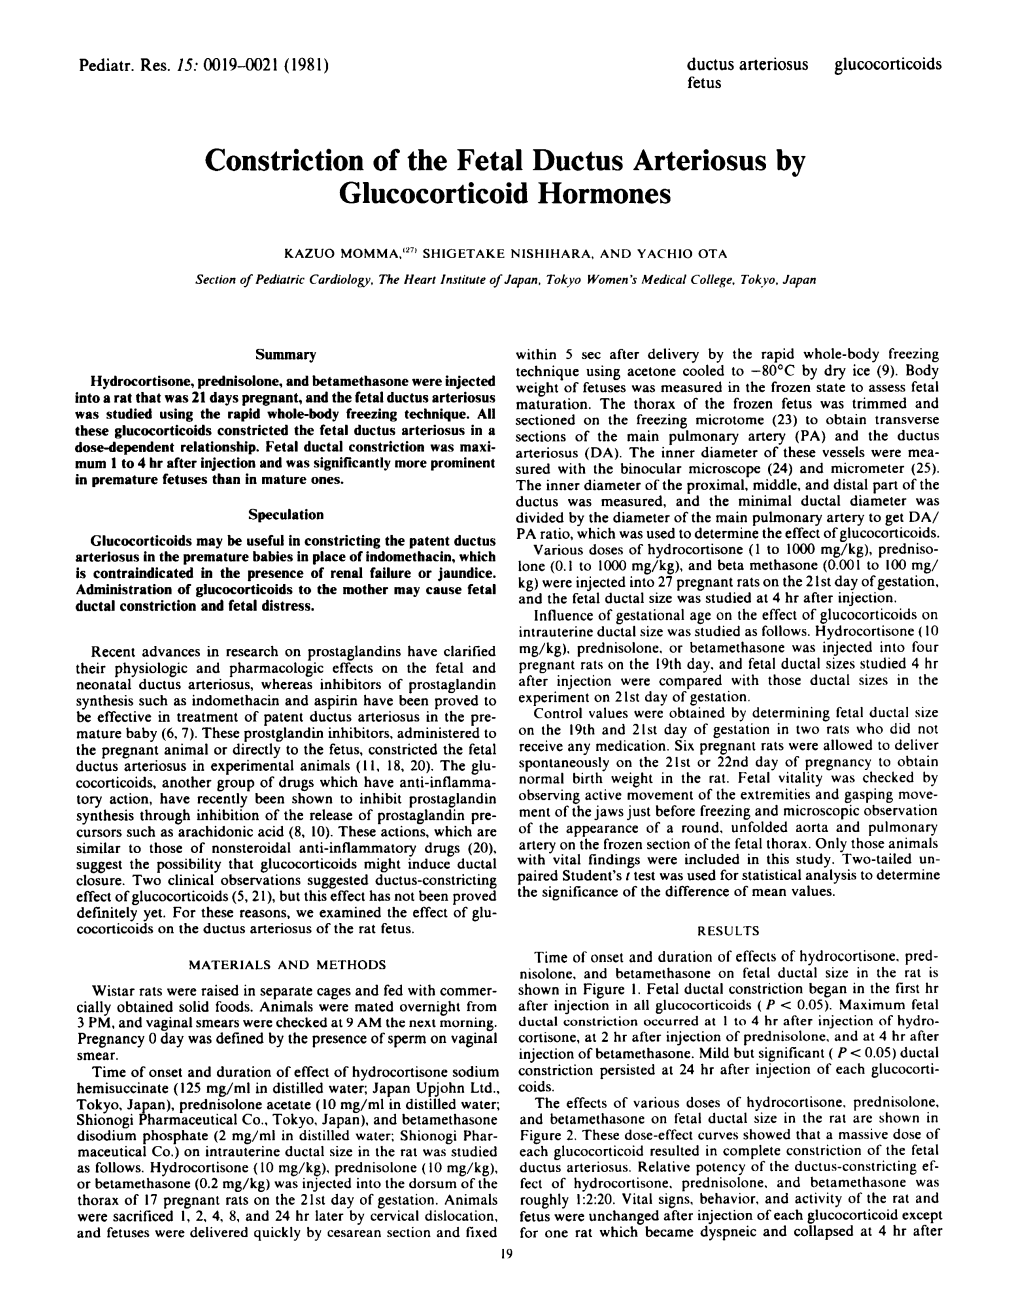 Constriction of the Fetal Ductus Arteriosus by Glucocorticoid Hormones